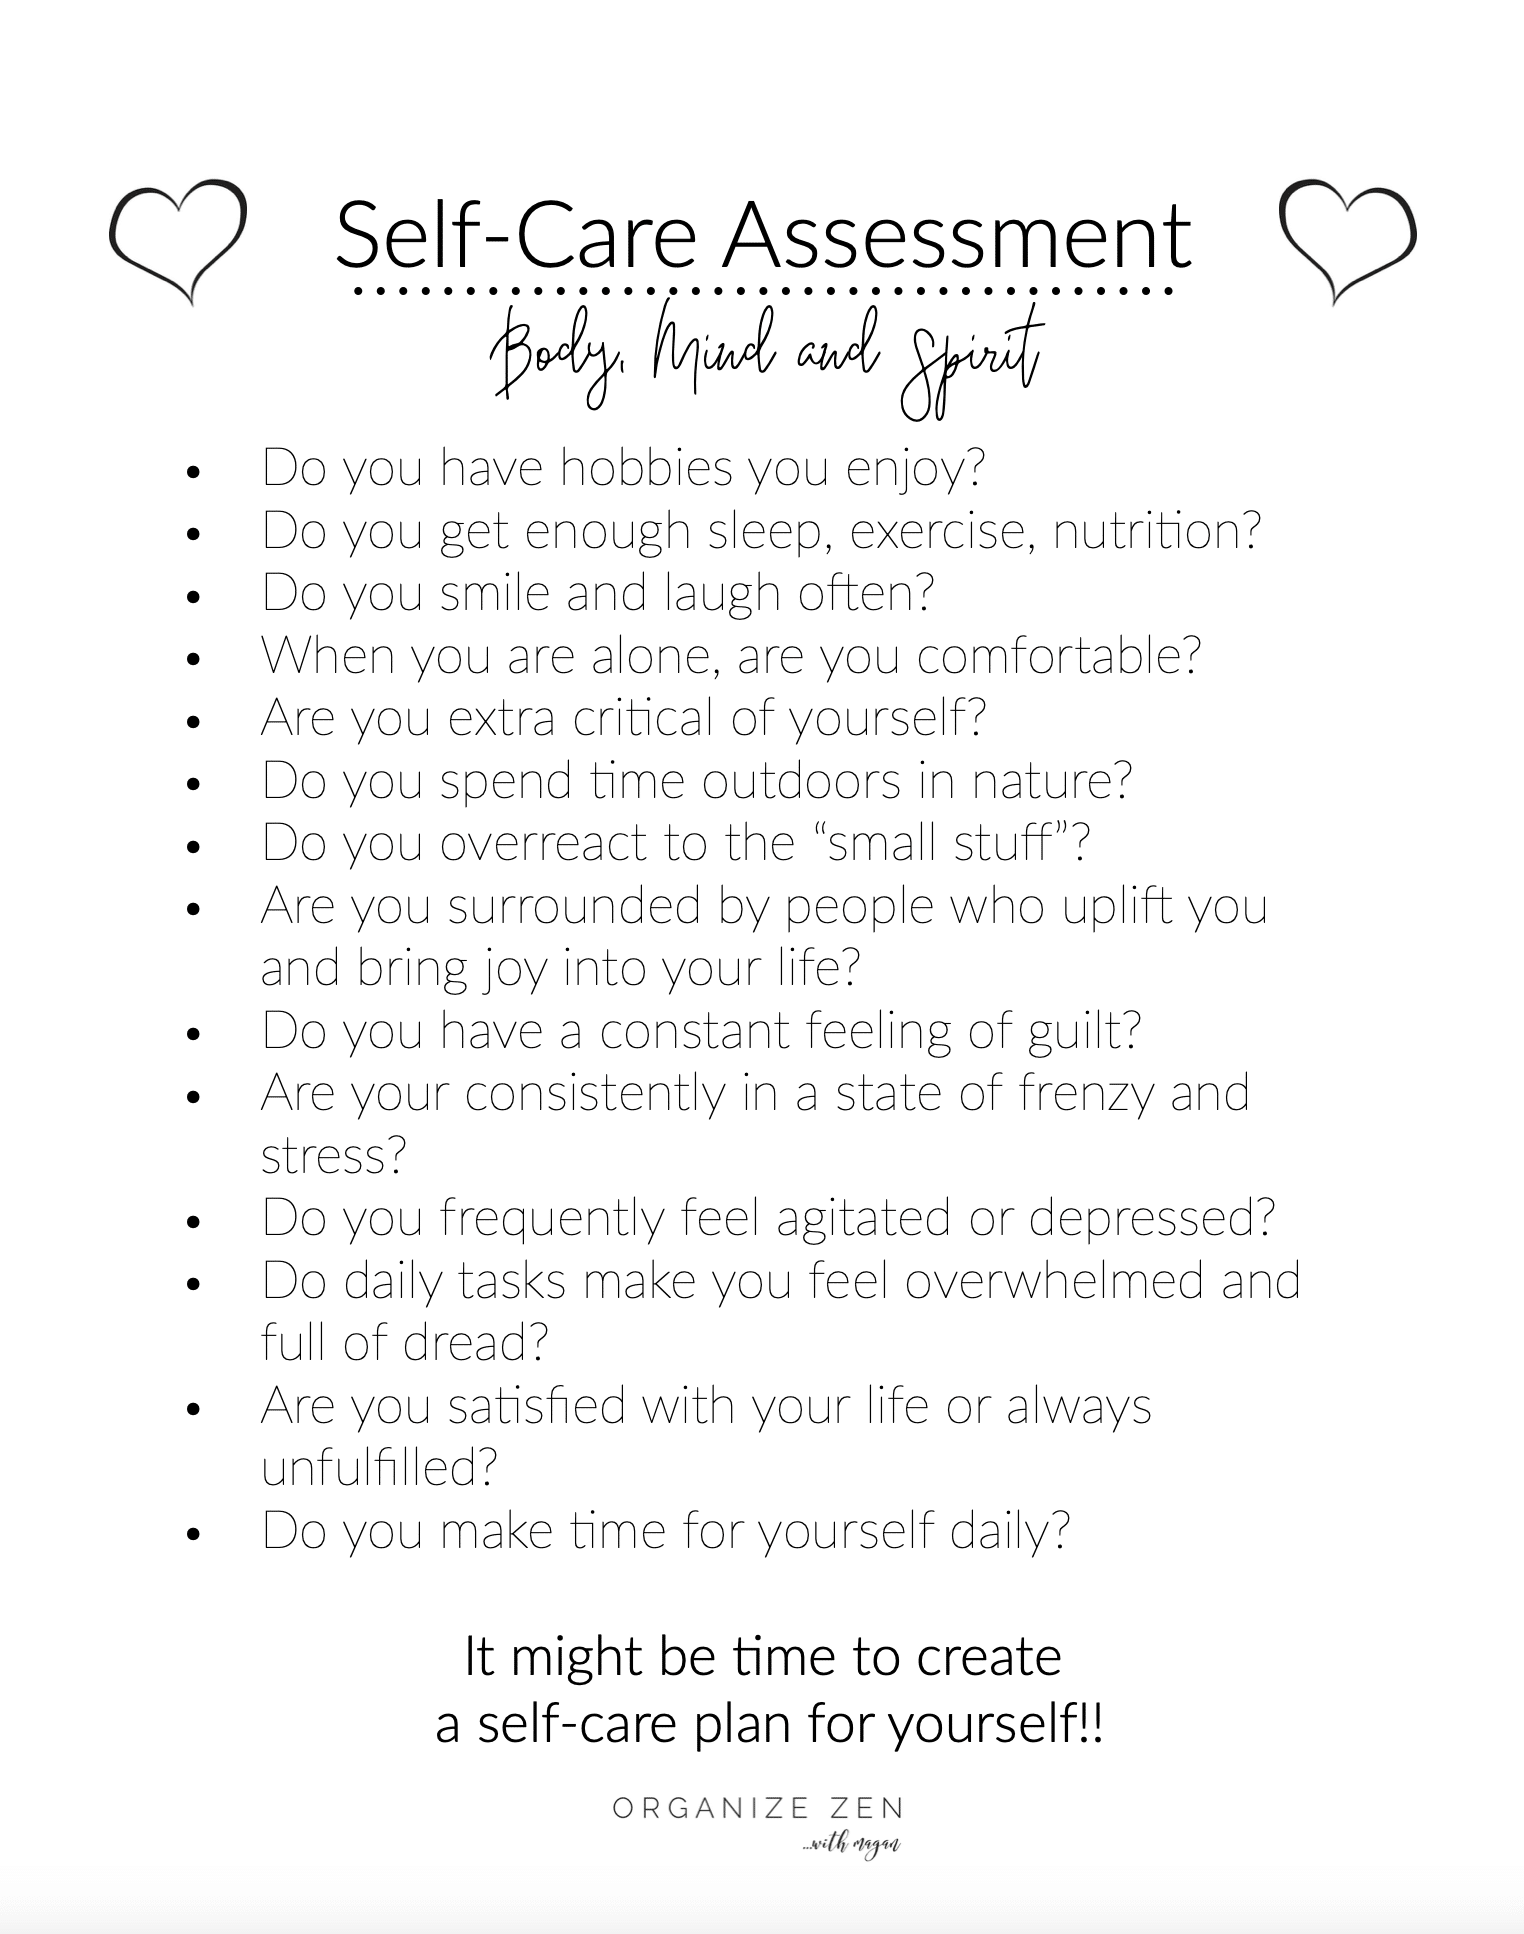 Self-care assessment checklist